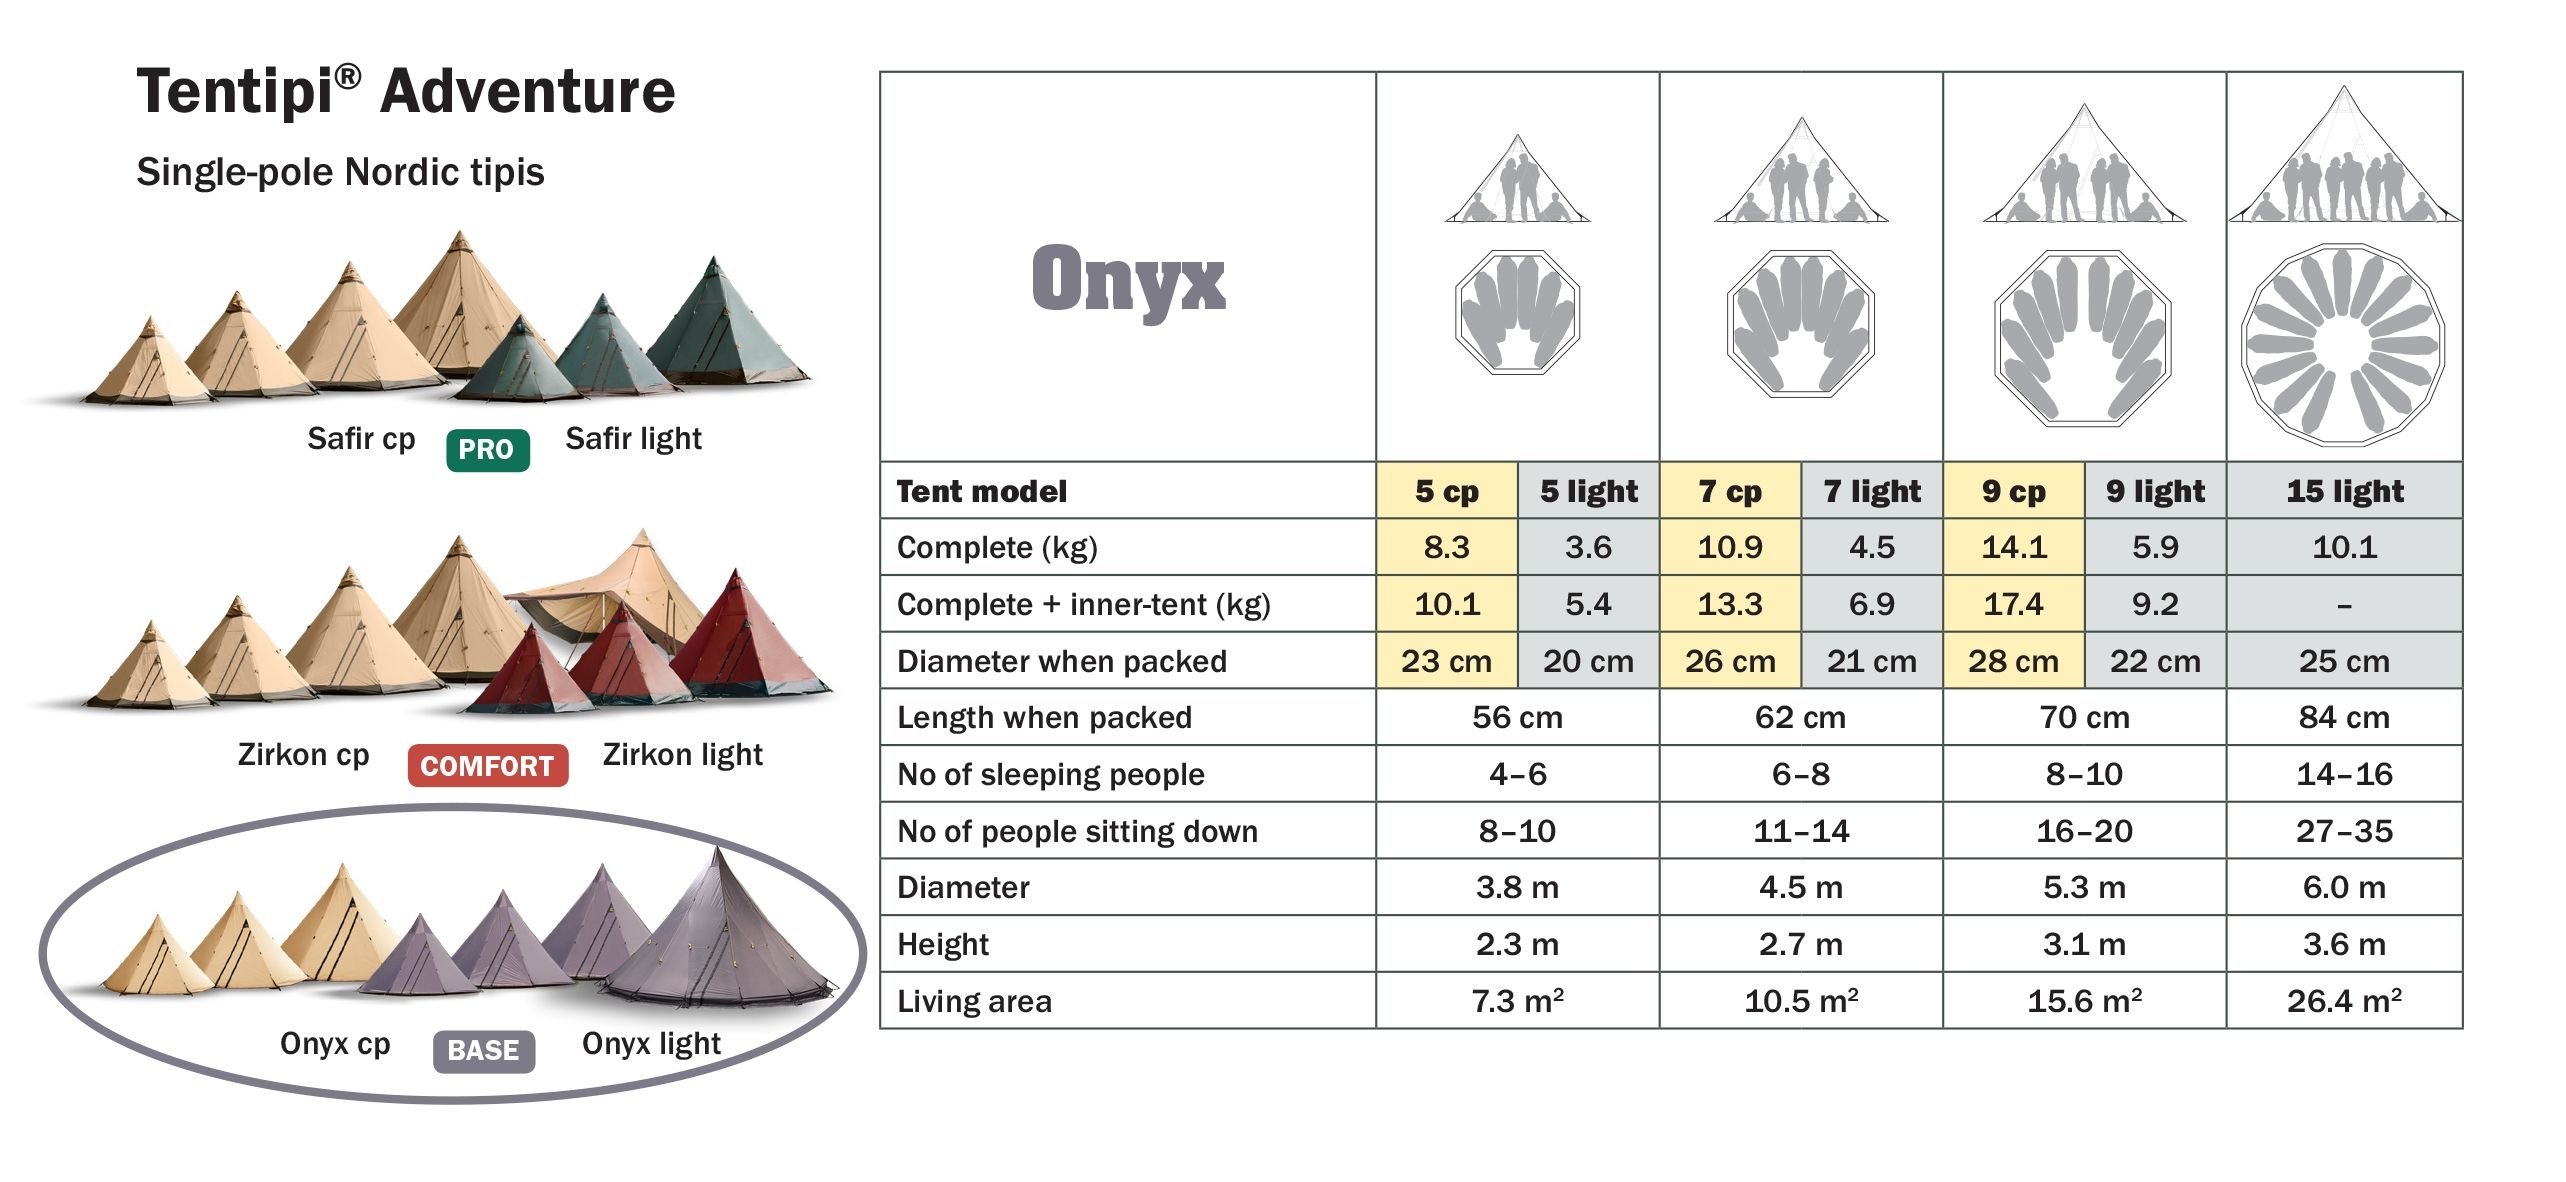 Tentipi Onyx Size Guide